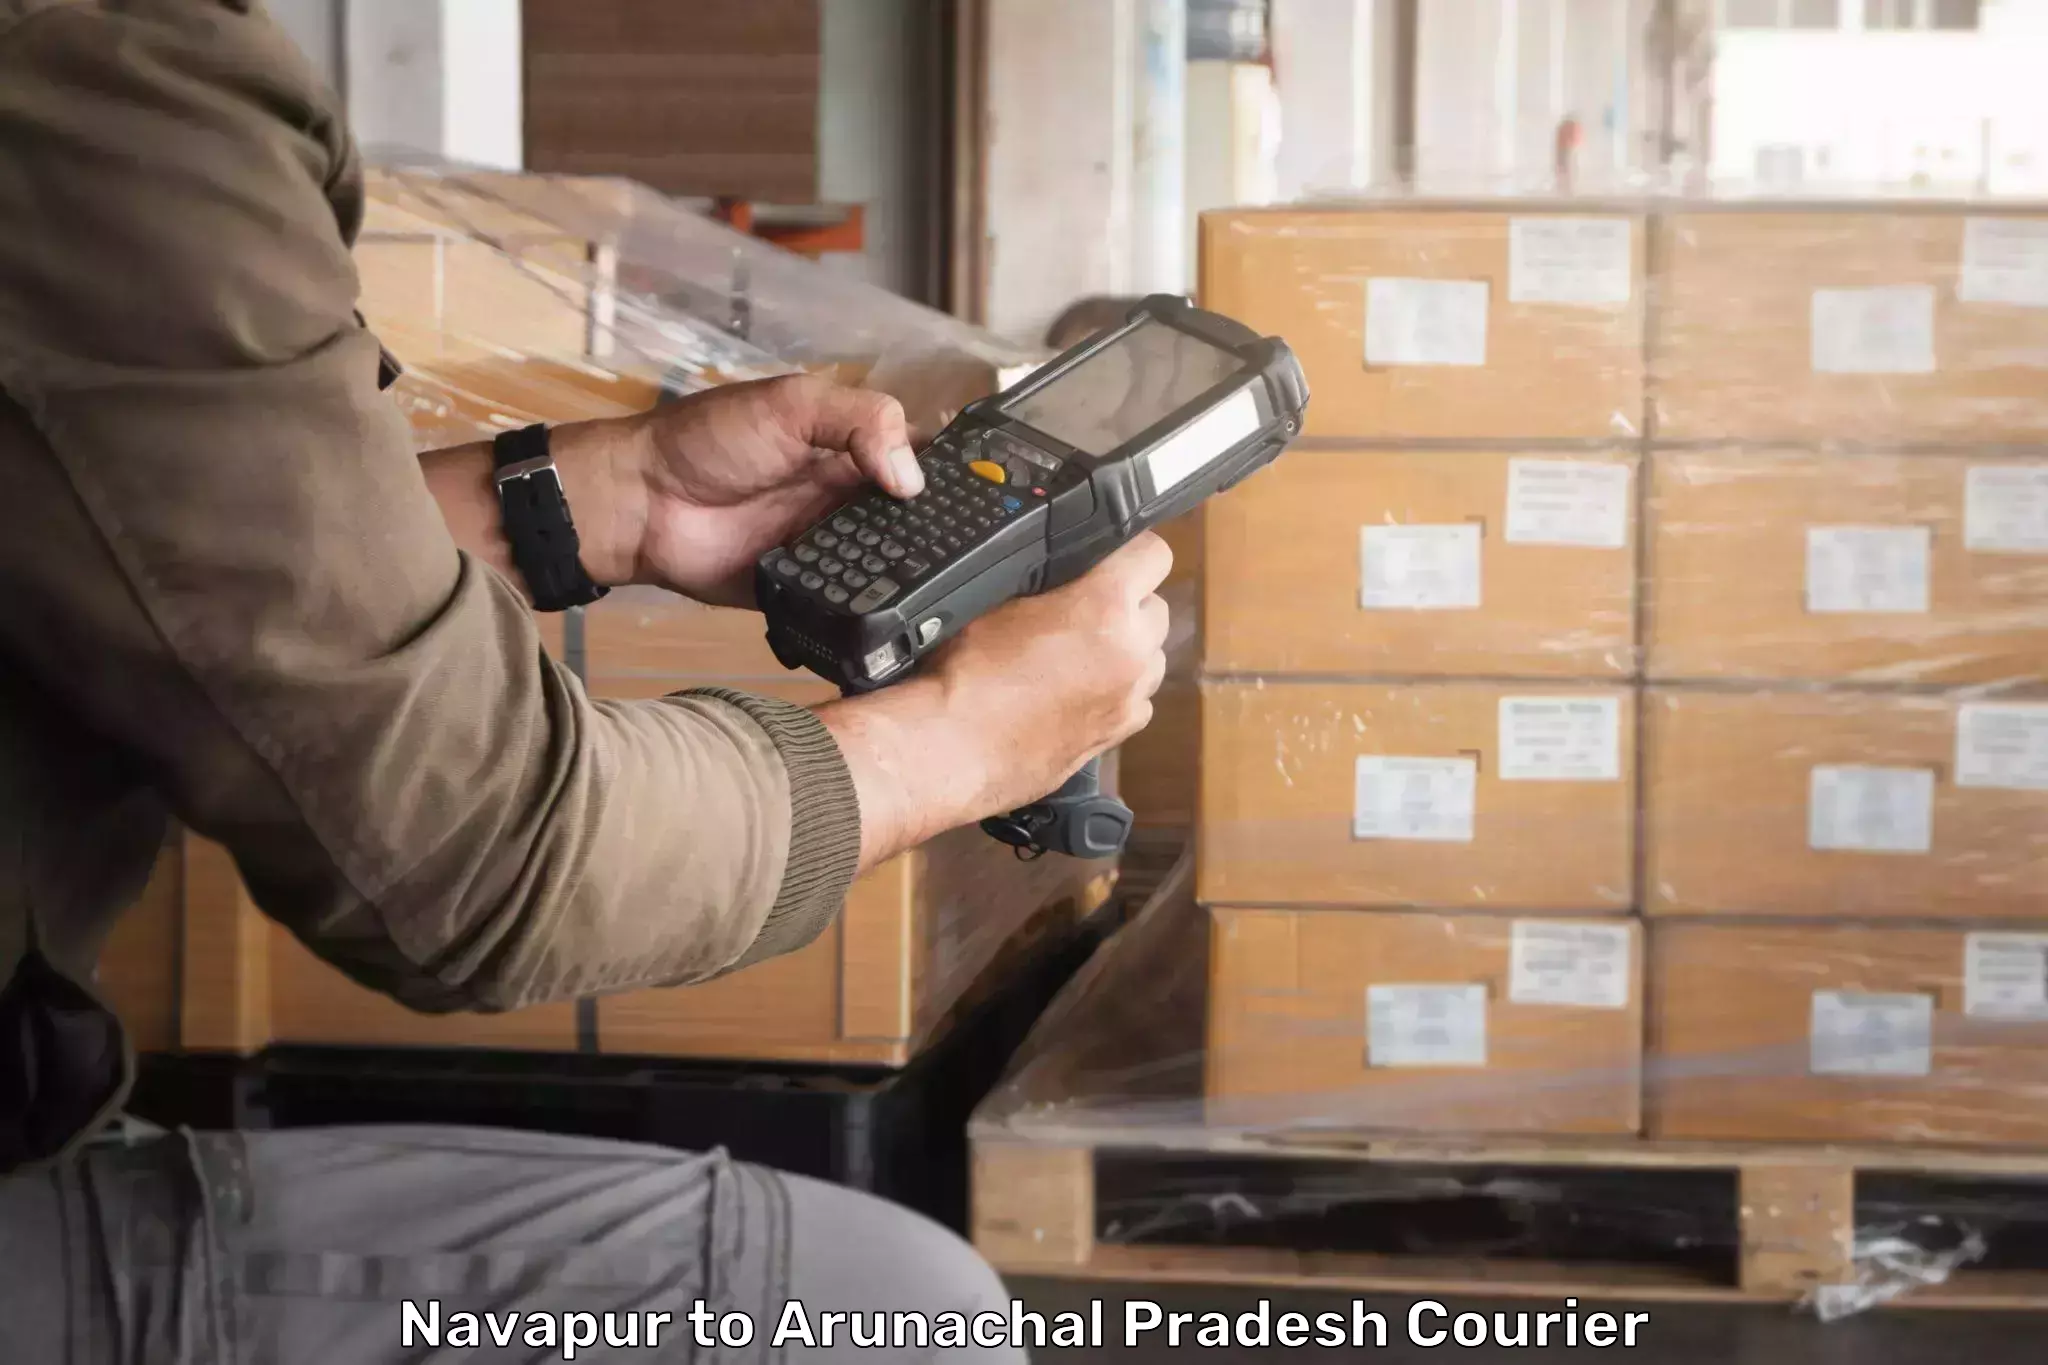 Express package delivery in Navapur to Arunachal Pradesh